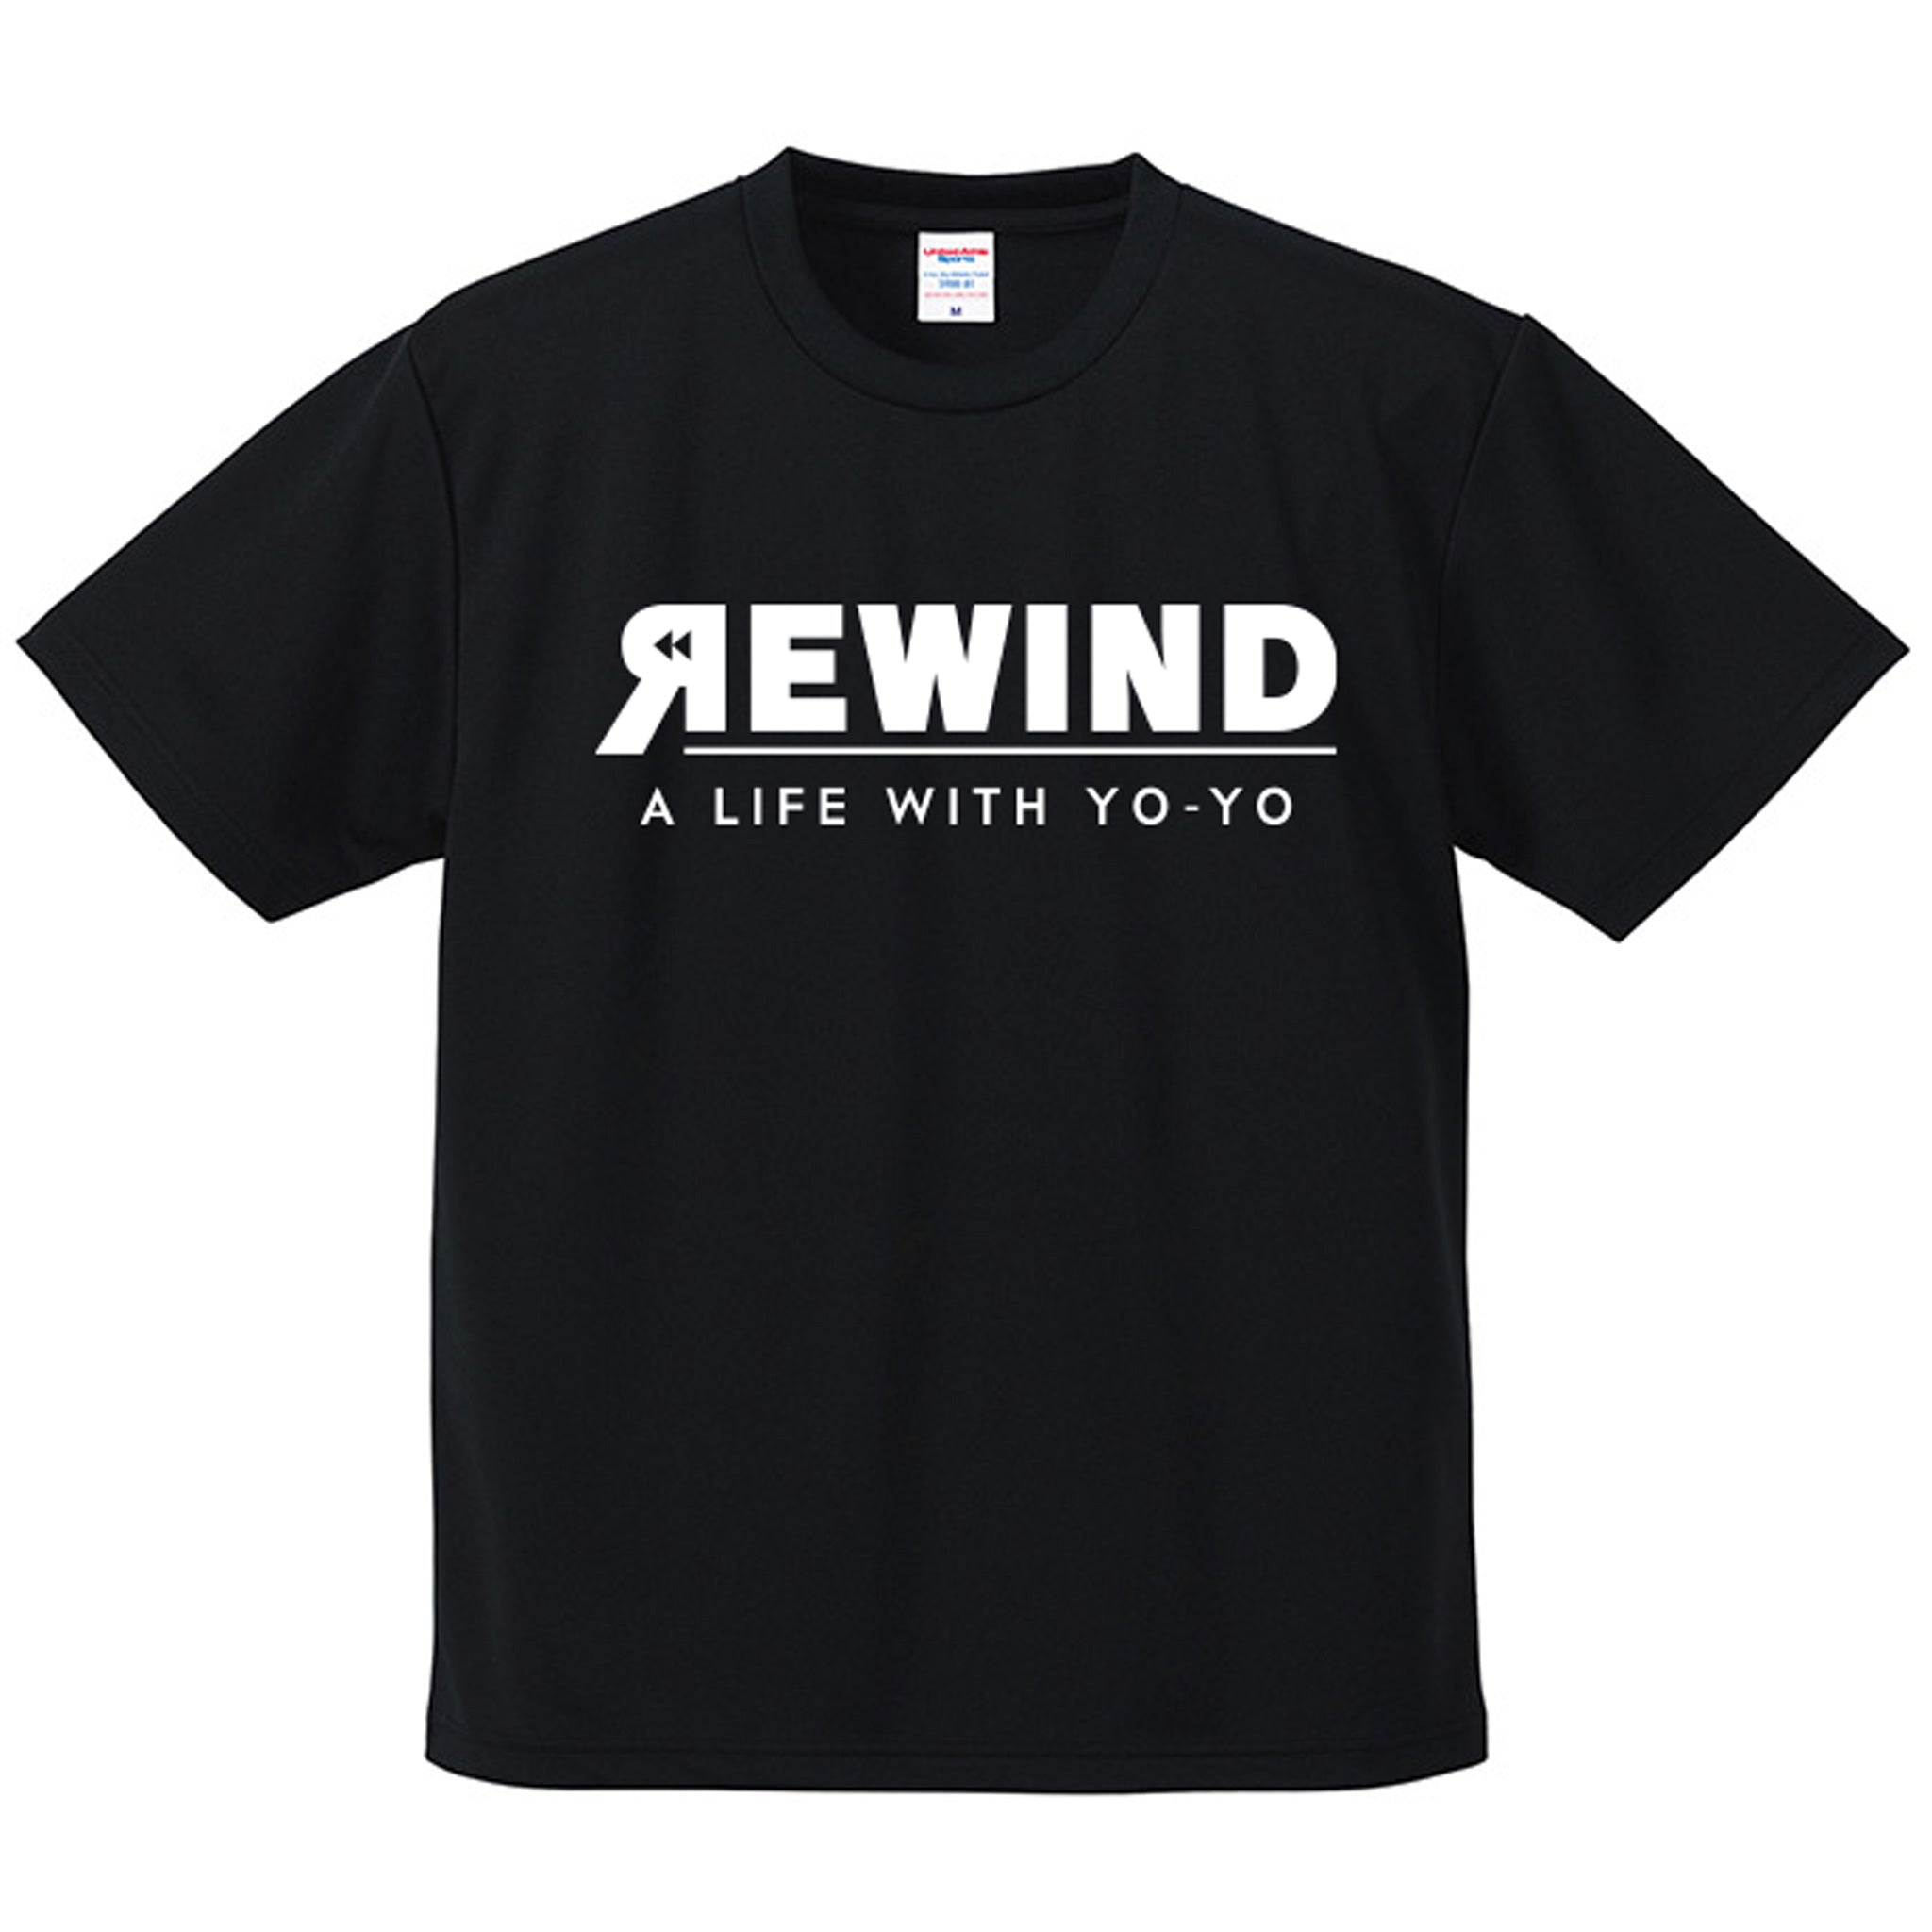 REWIND -A LIFE WITH YO-YO- ドライTシャツ (ブラック / ホワイトロゴ ...